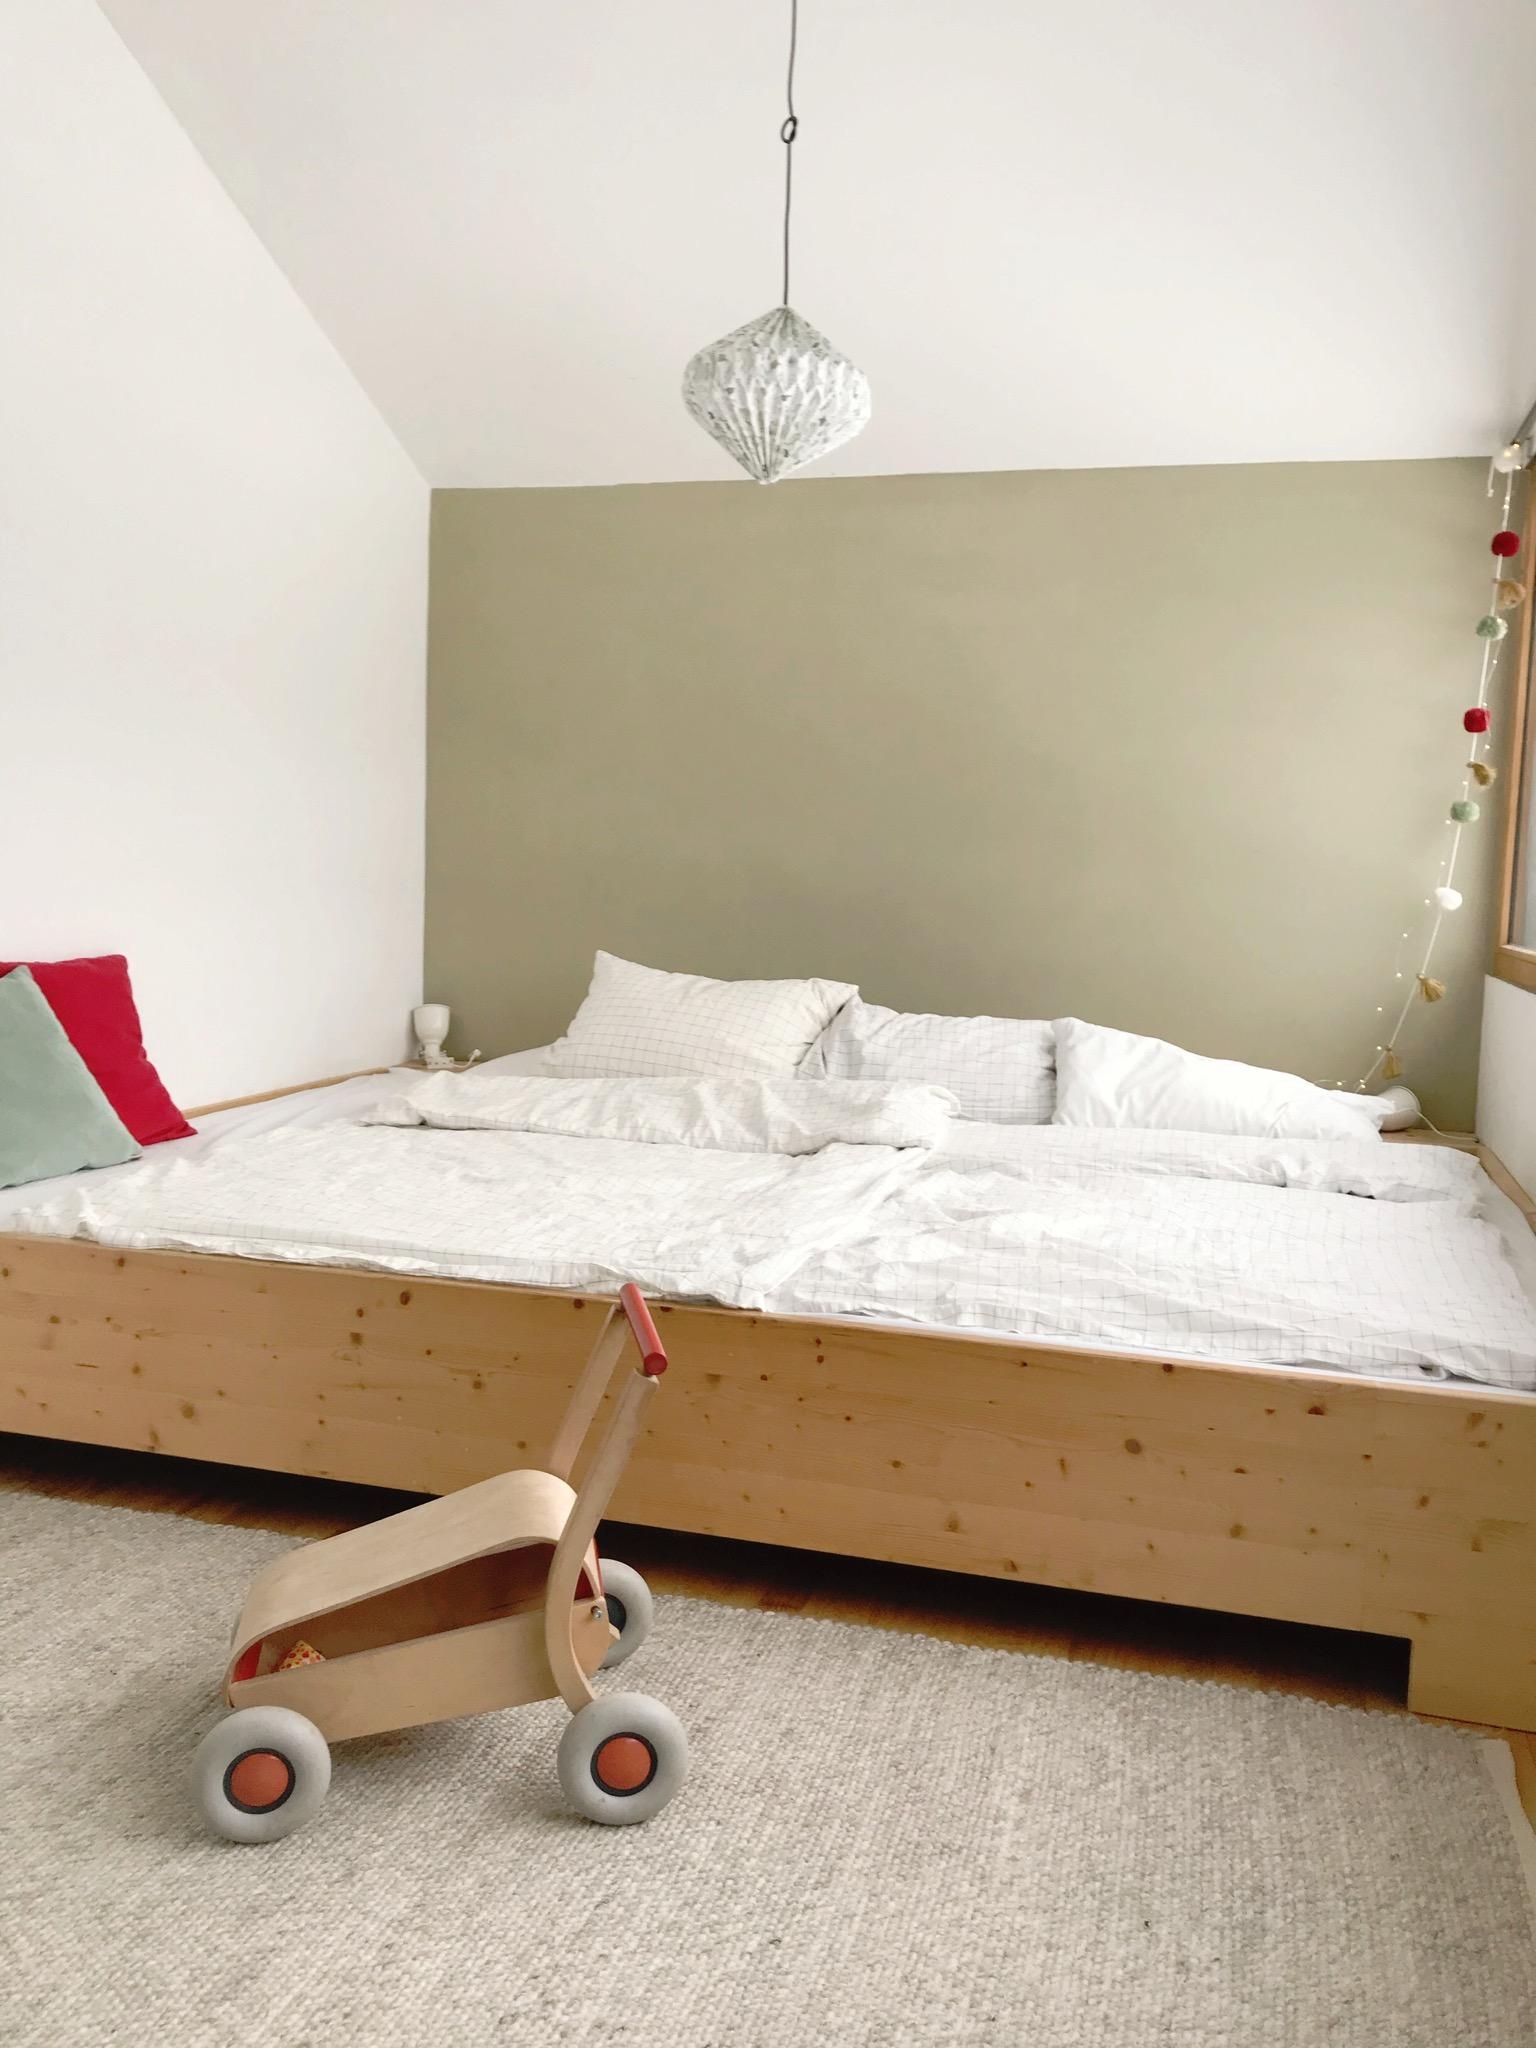 #bedroom #cozy #familybed Ein makeover bringt mehr Ruhe in den Raum